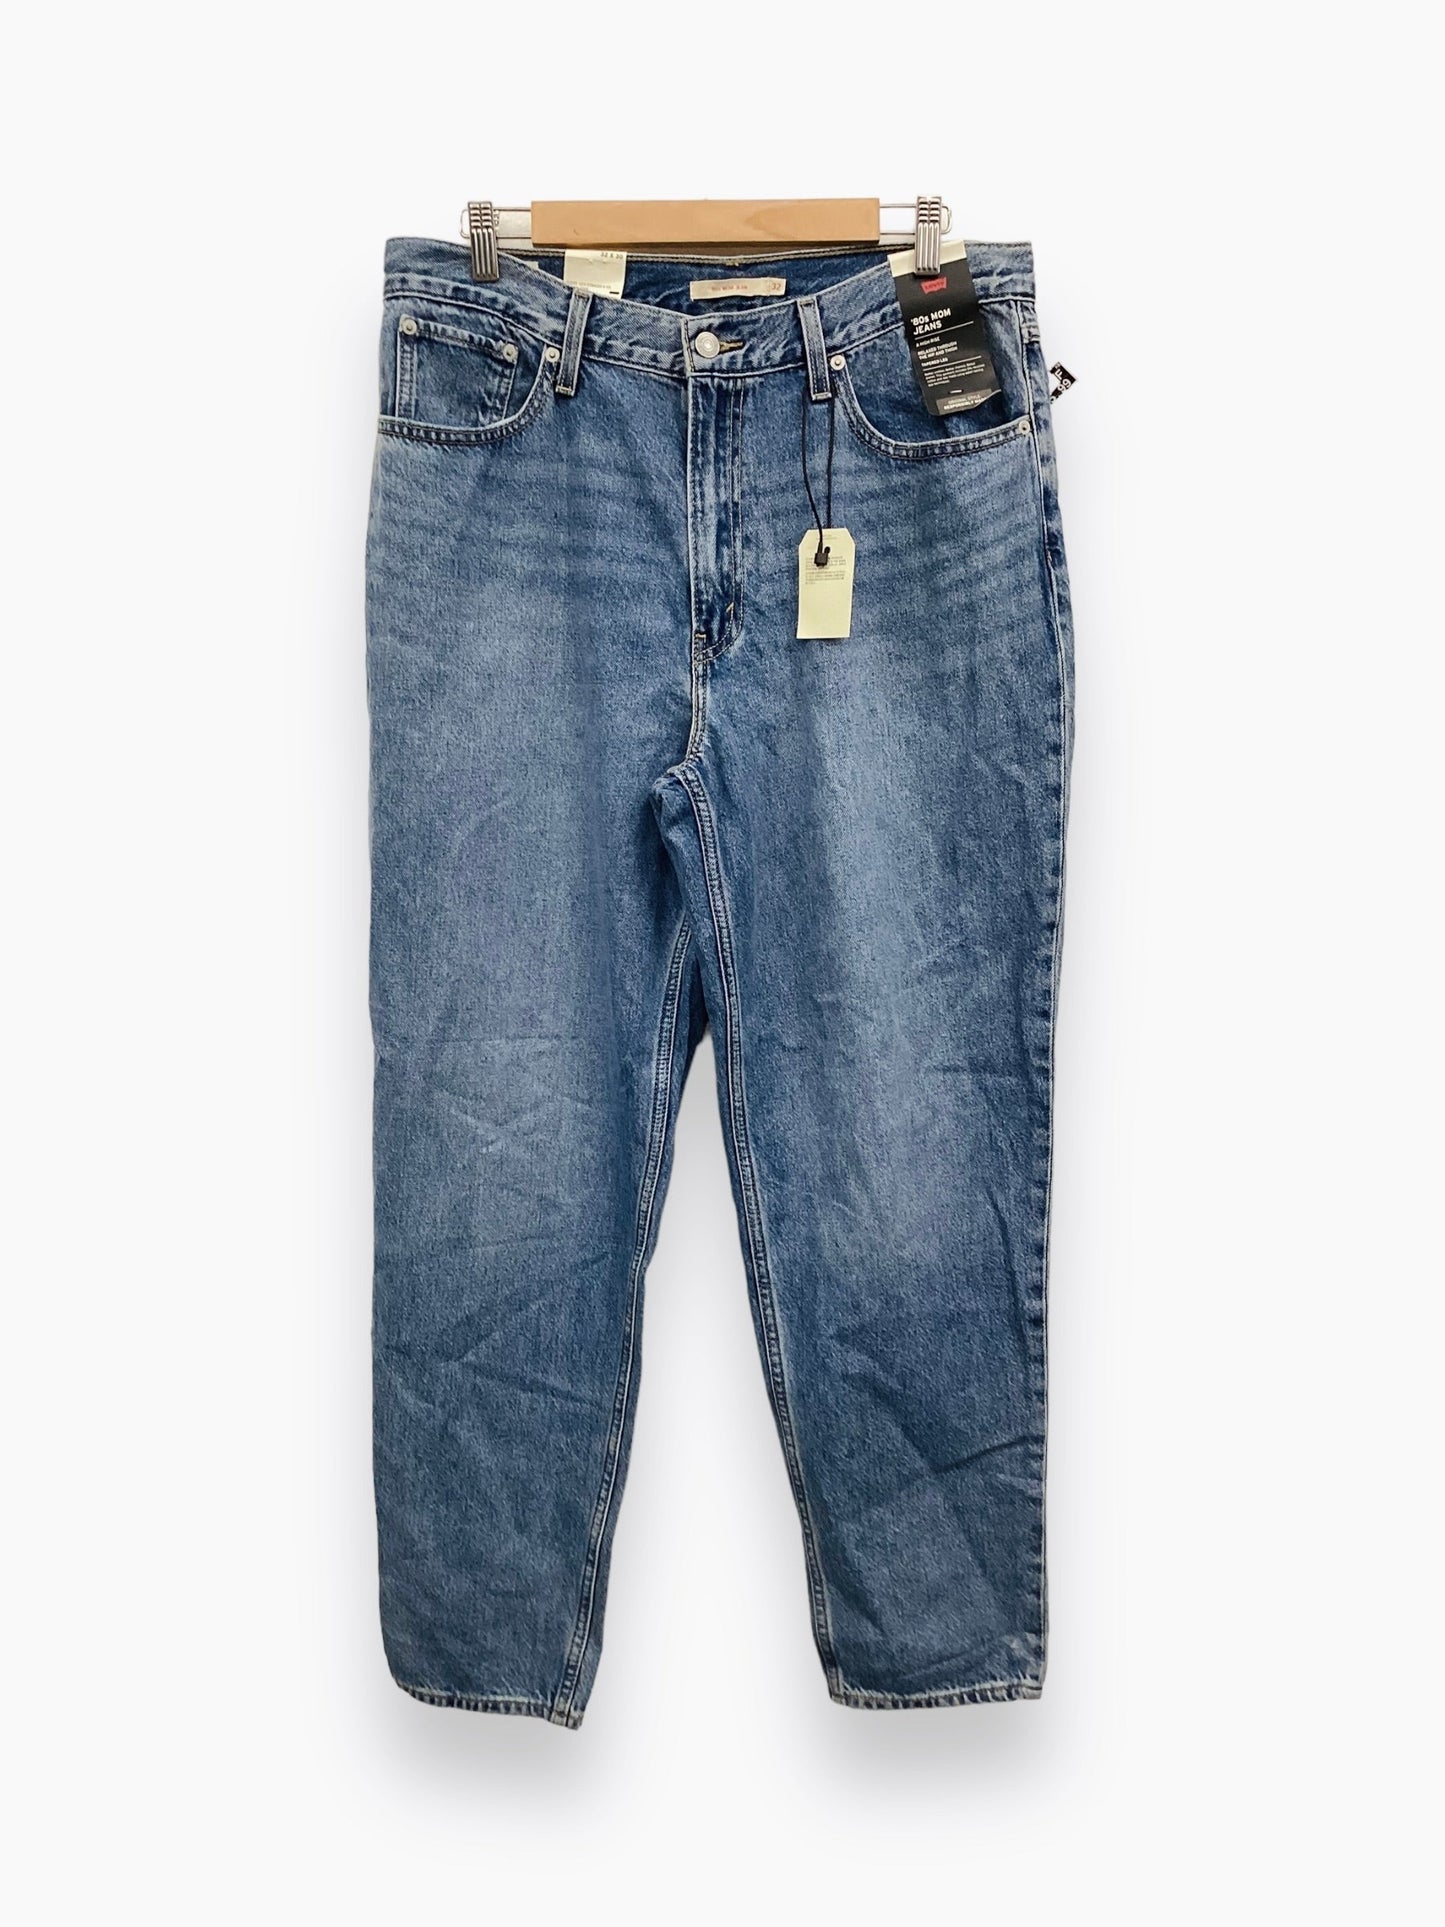 NWT Blue Denim Jeans Straight Levis, Size 14